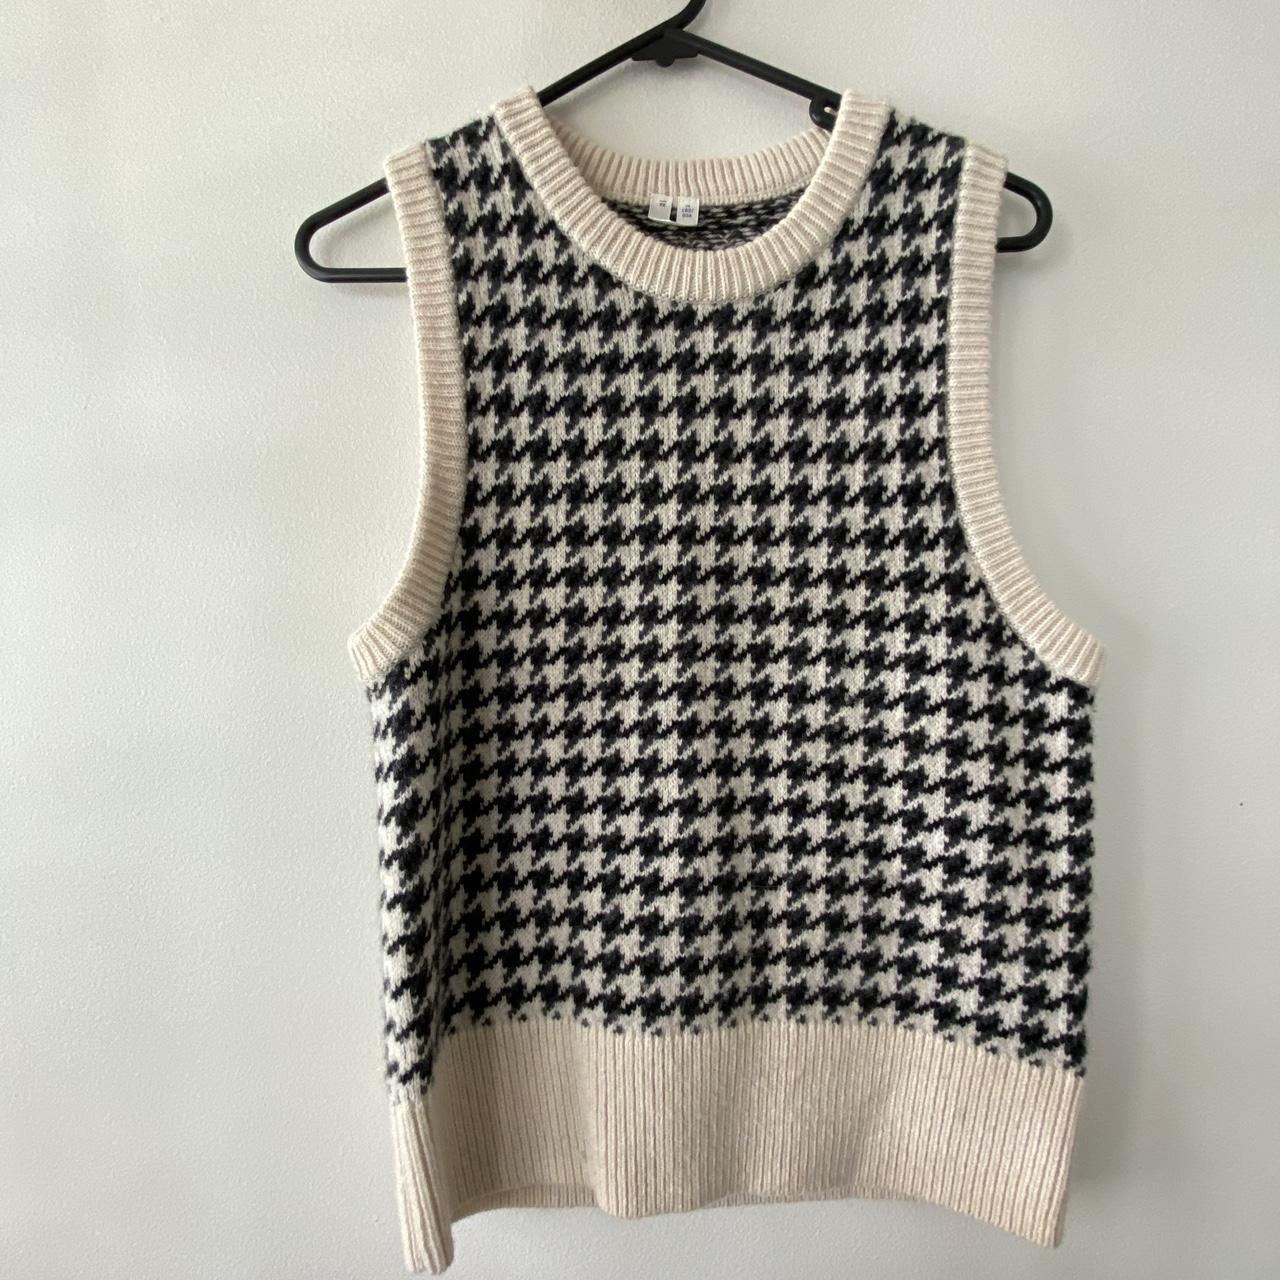 Uni-qlo black white gingham check knit vest S (fits... - Depop